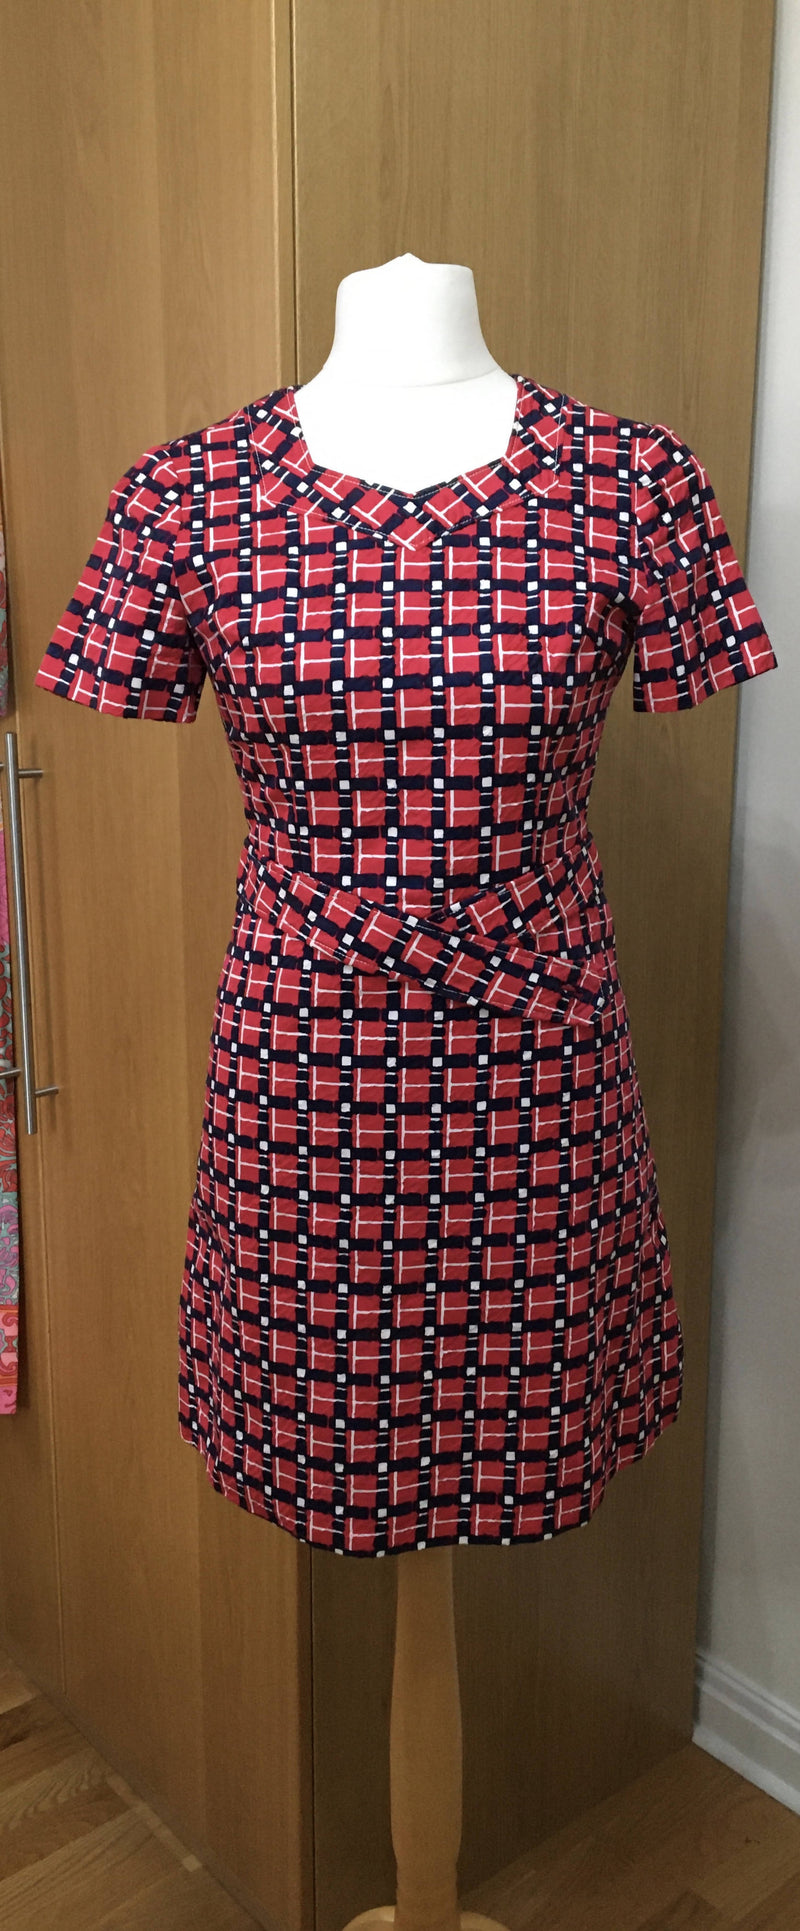 Pret-a-Porter 1960s Vintage Shift Mod Dress.